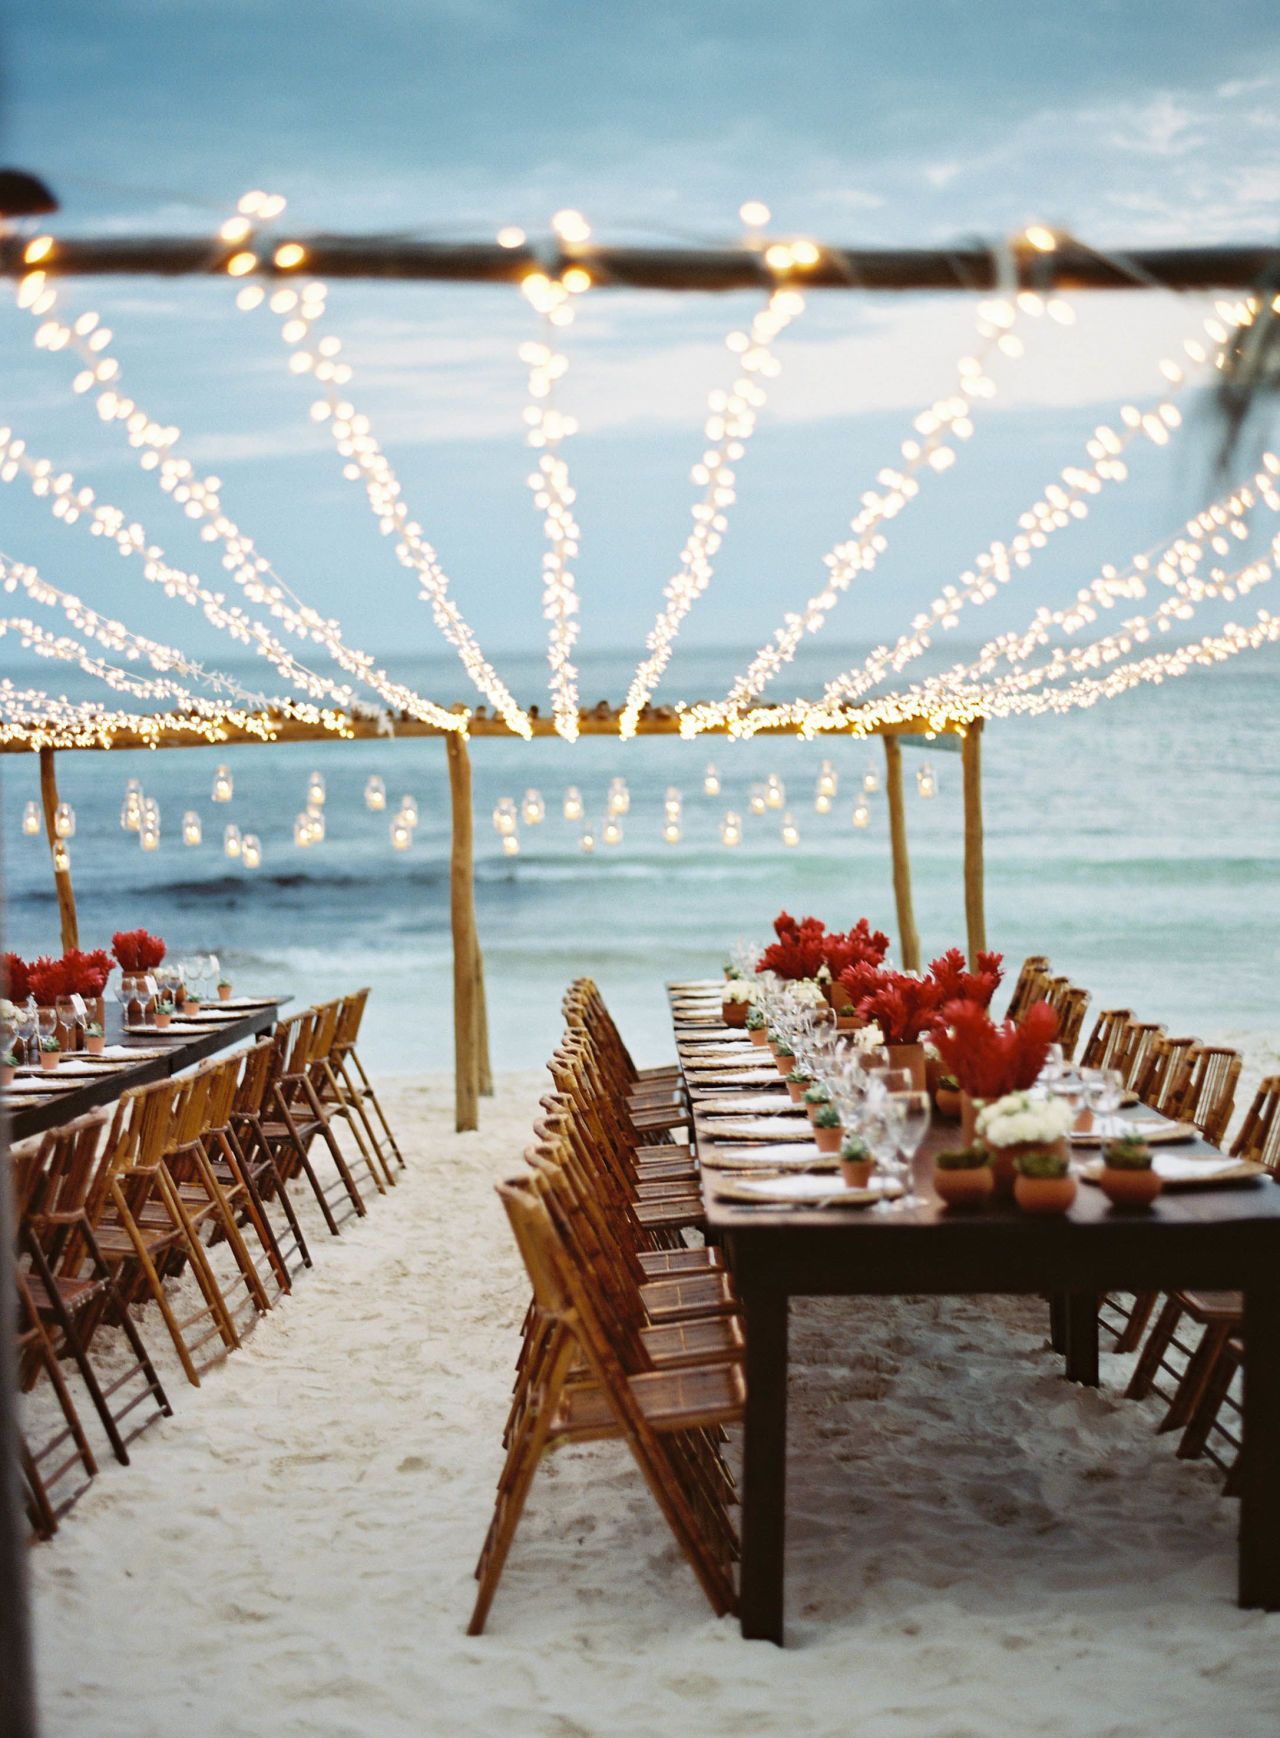 The Most Idyllic Beach Wedding | Red flowers, Beach weddings and Flowers